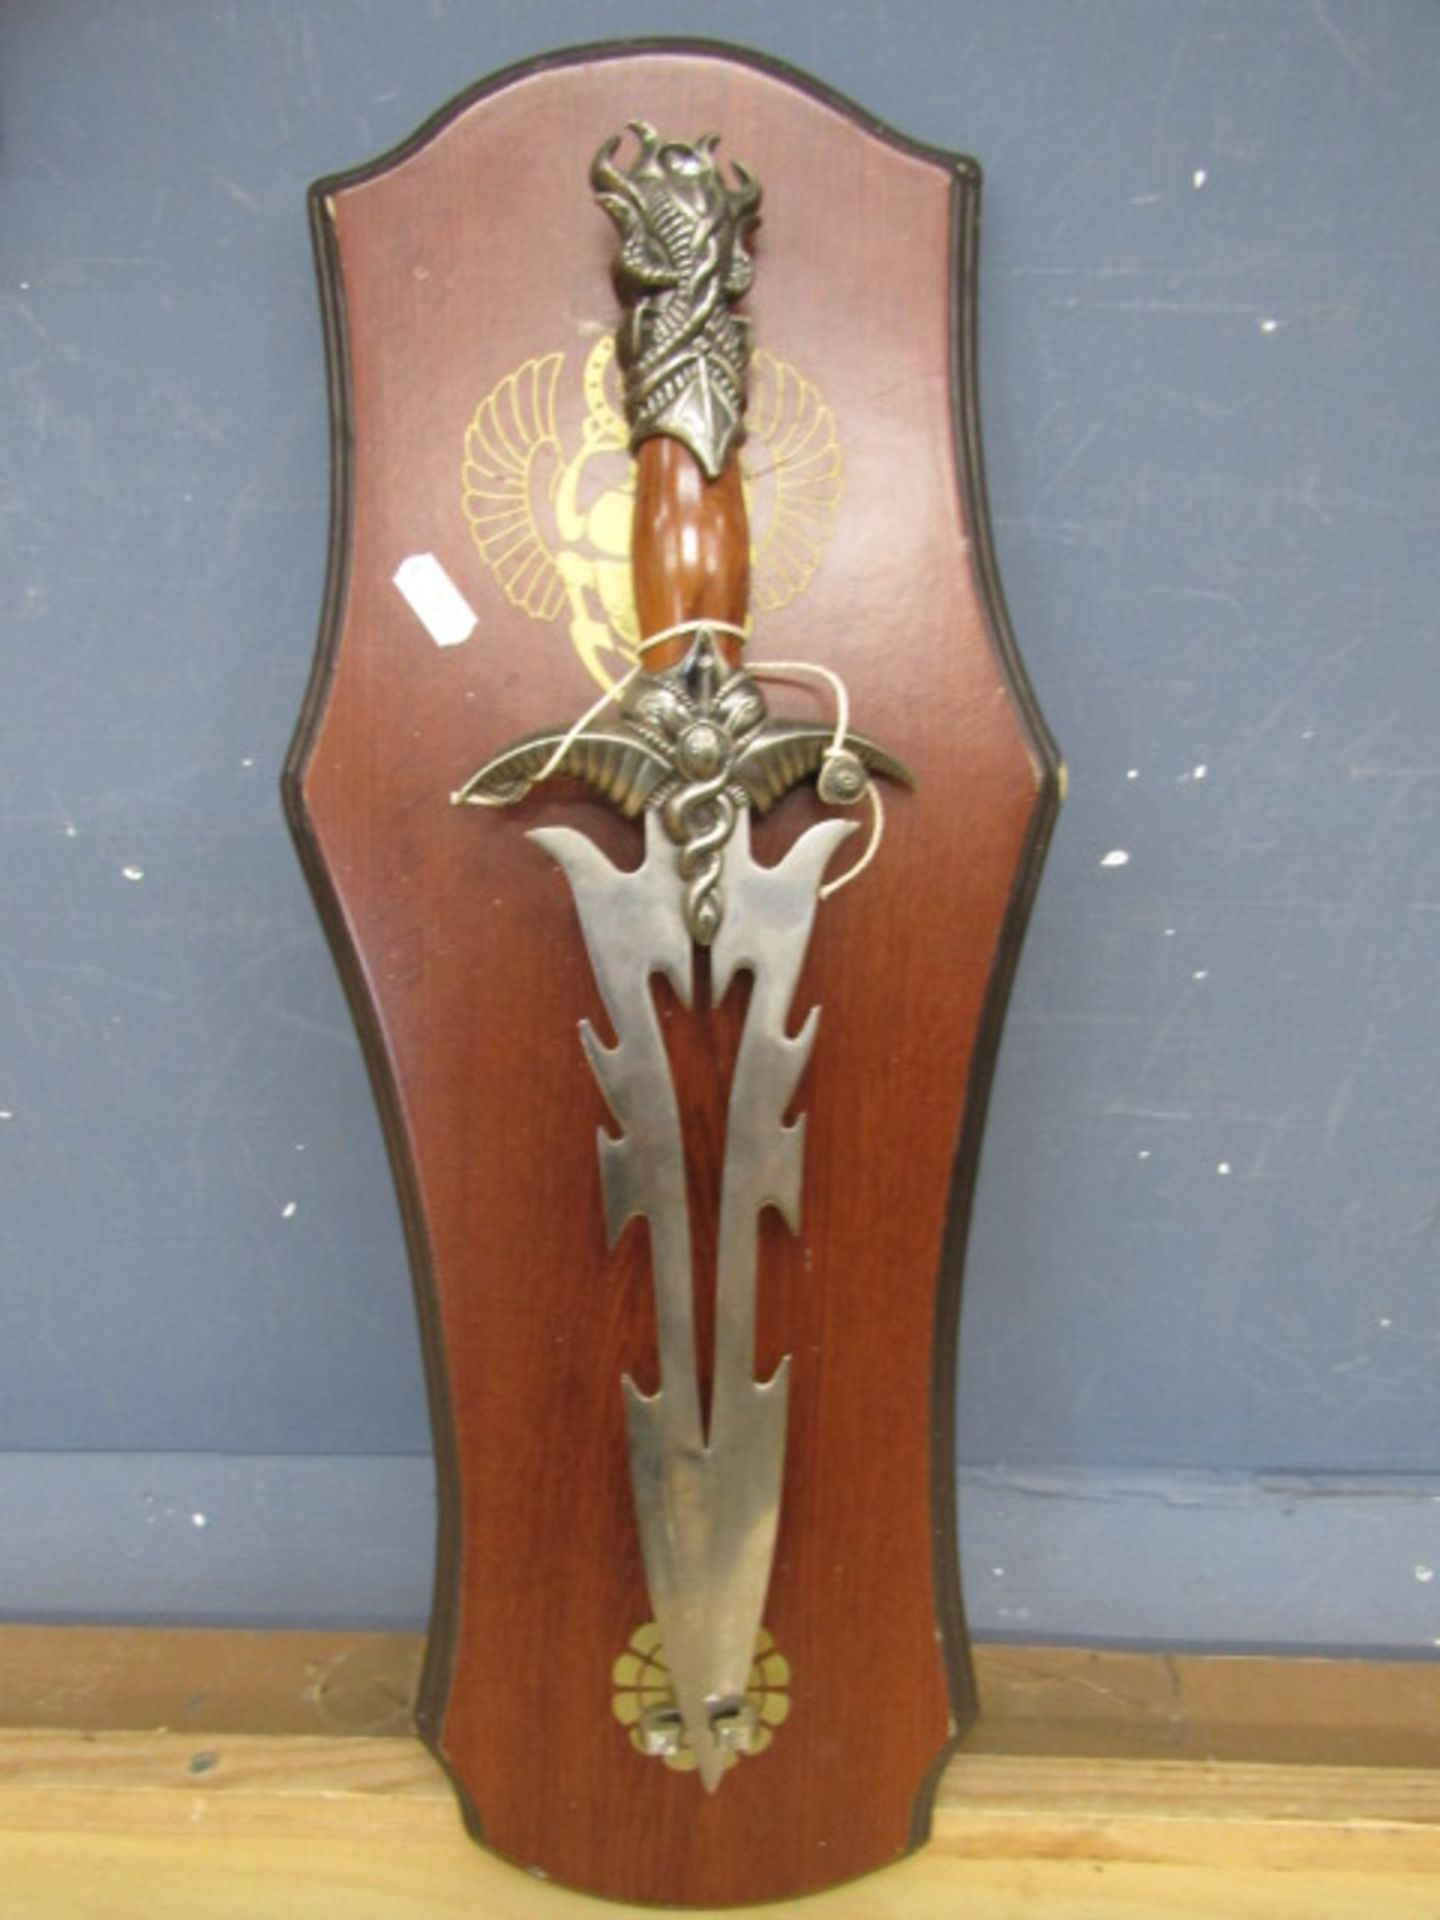 Ceremonial dagger on display board